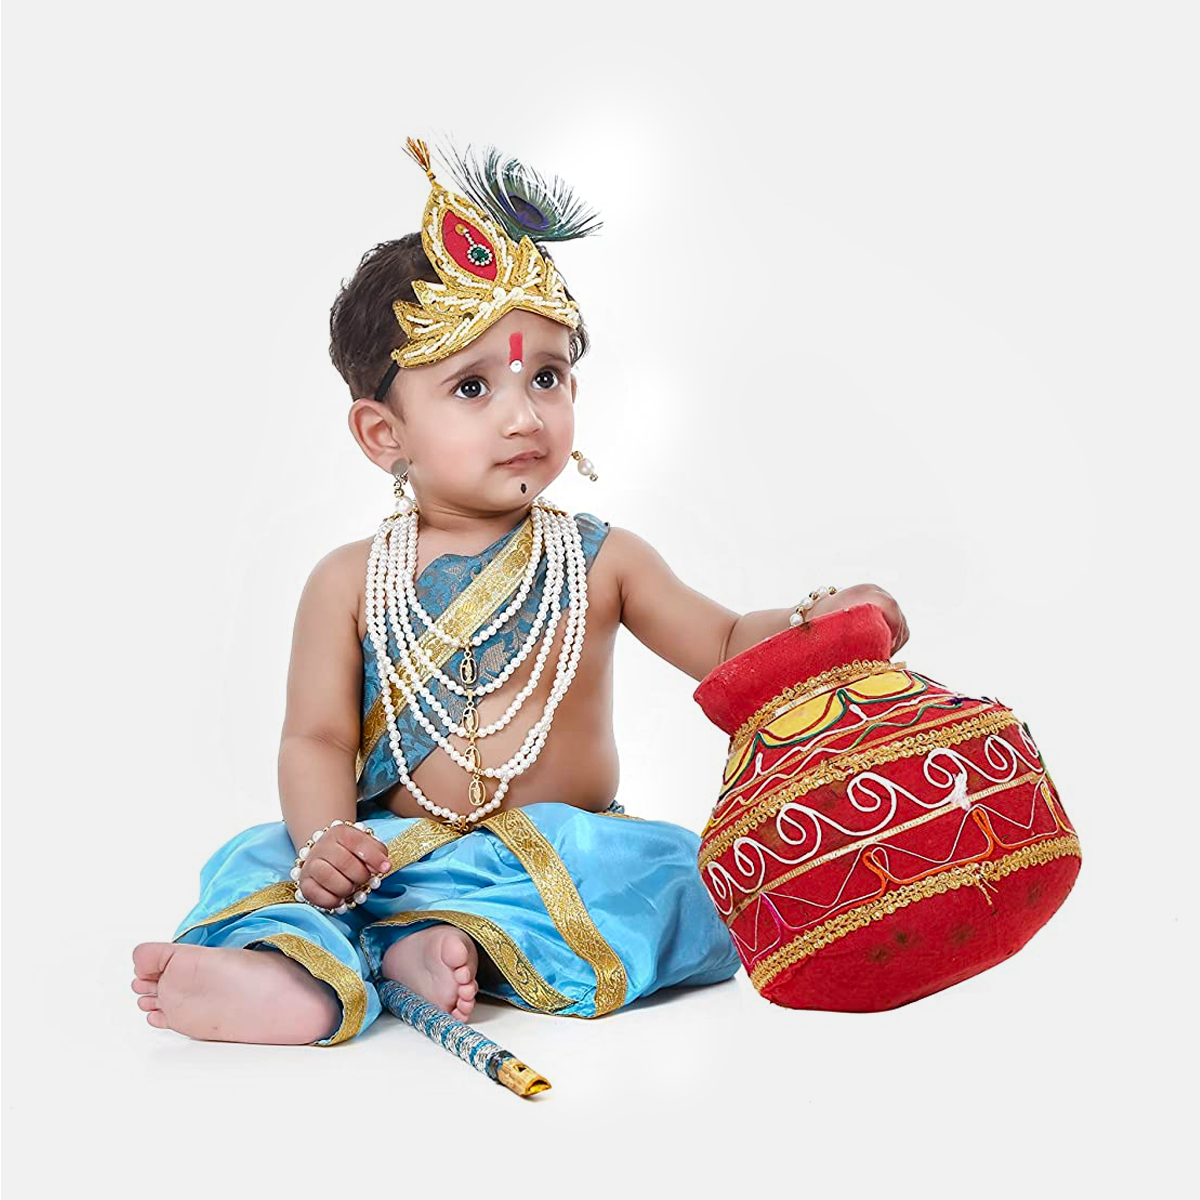 Baby Krishna Dress Up for Krishna Janmashtami - YouTube